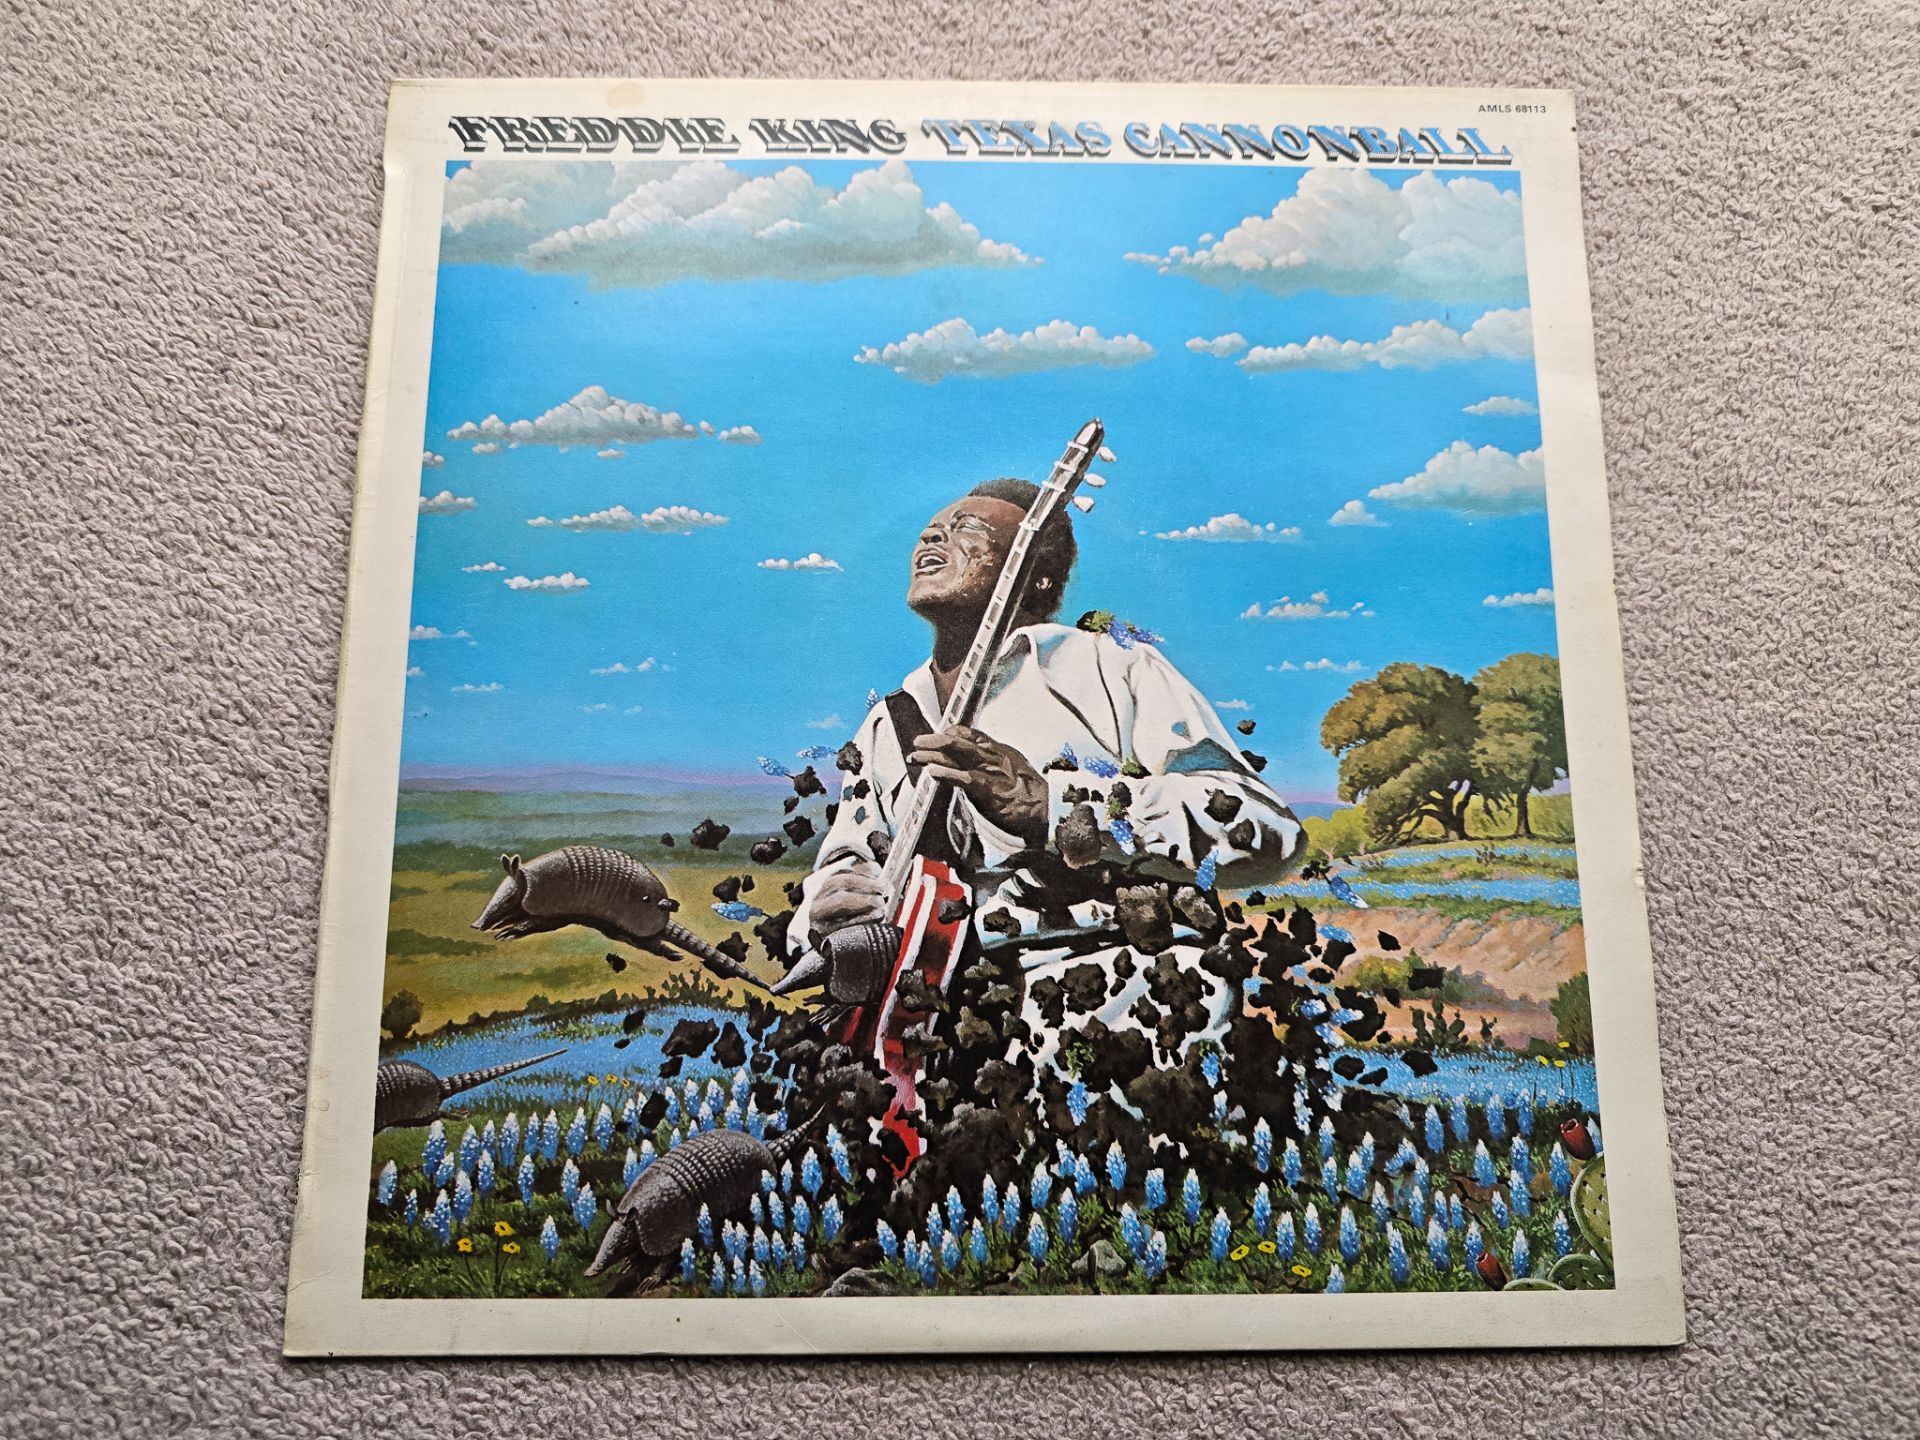 Freddie King – Texas Cannonball Mint Original 1972 UK Vinyl LP